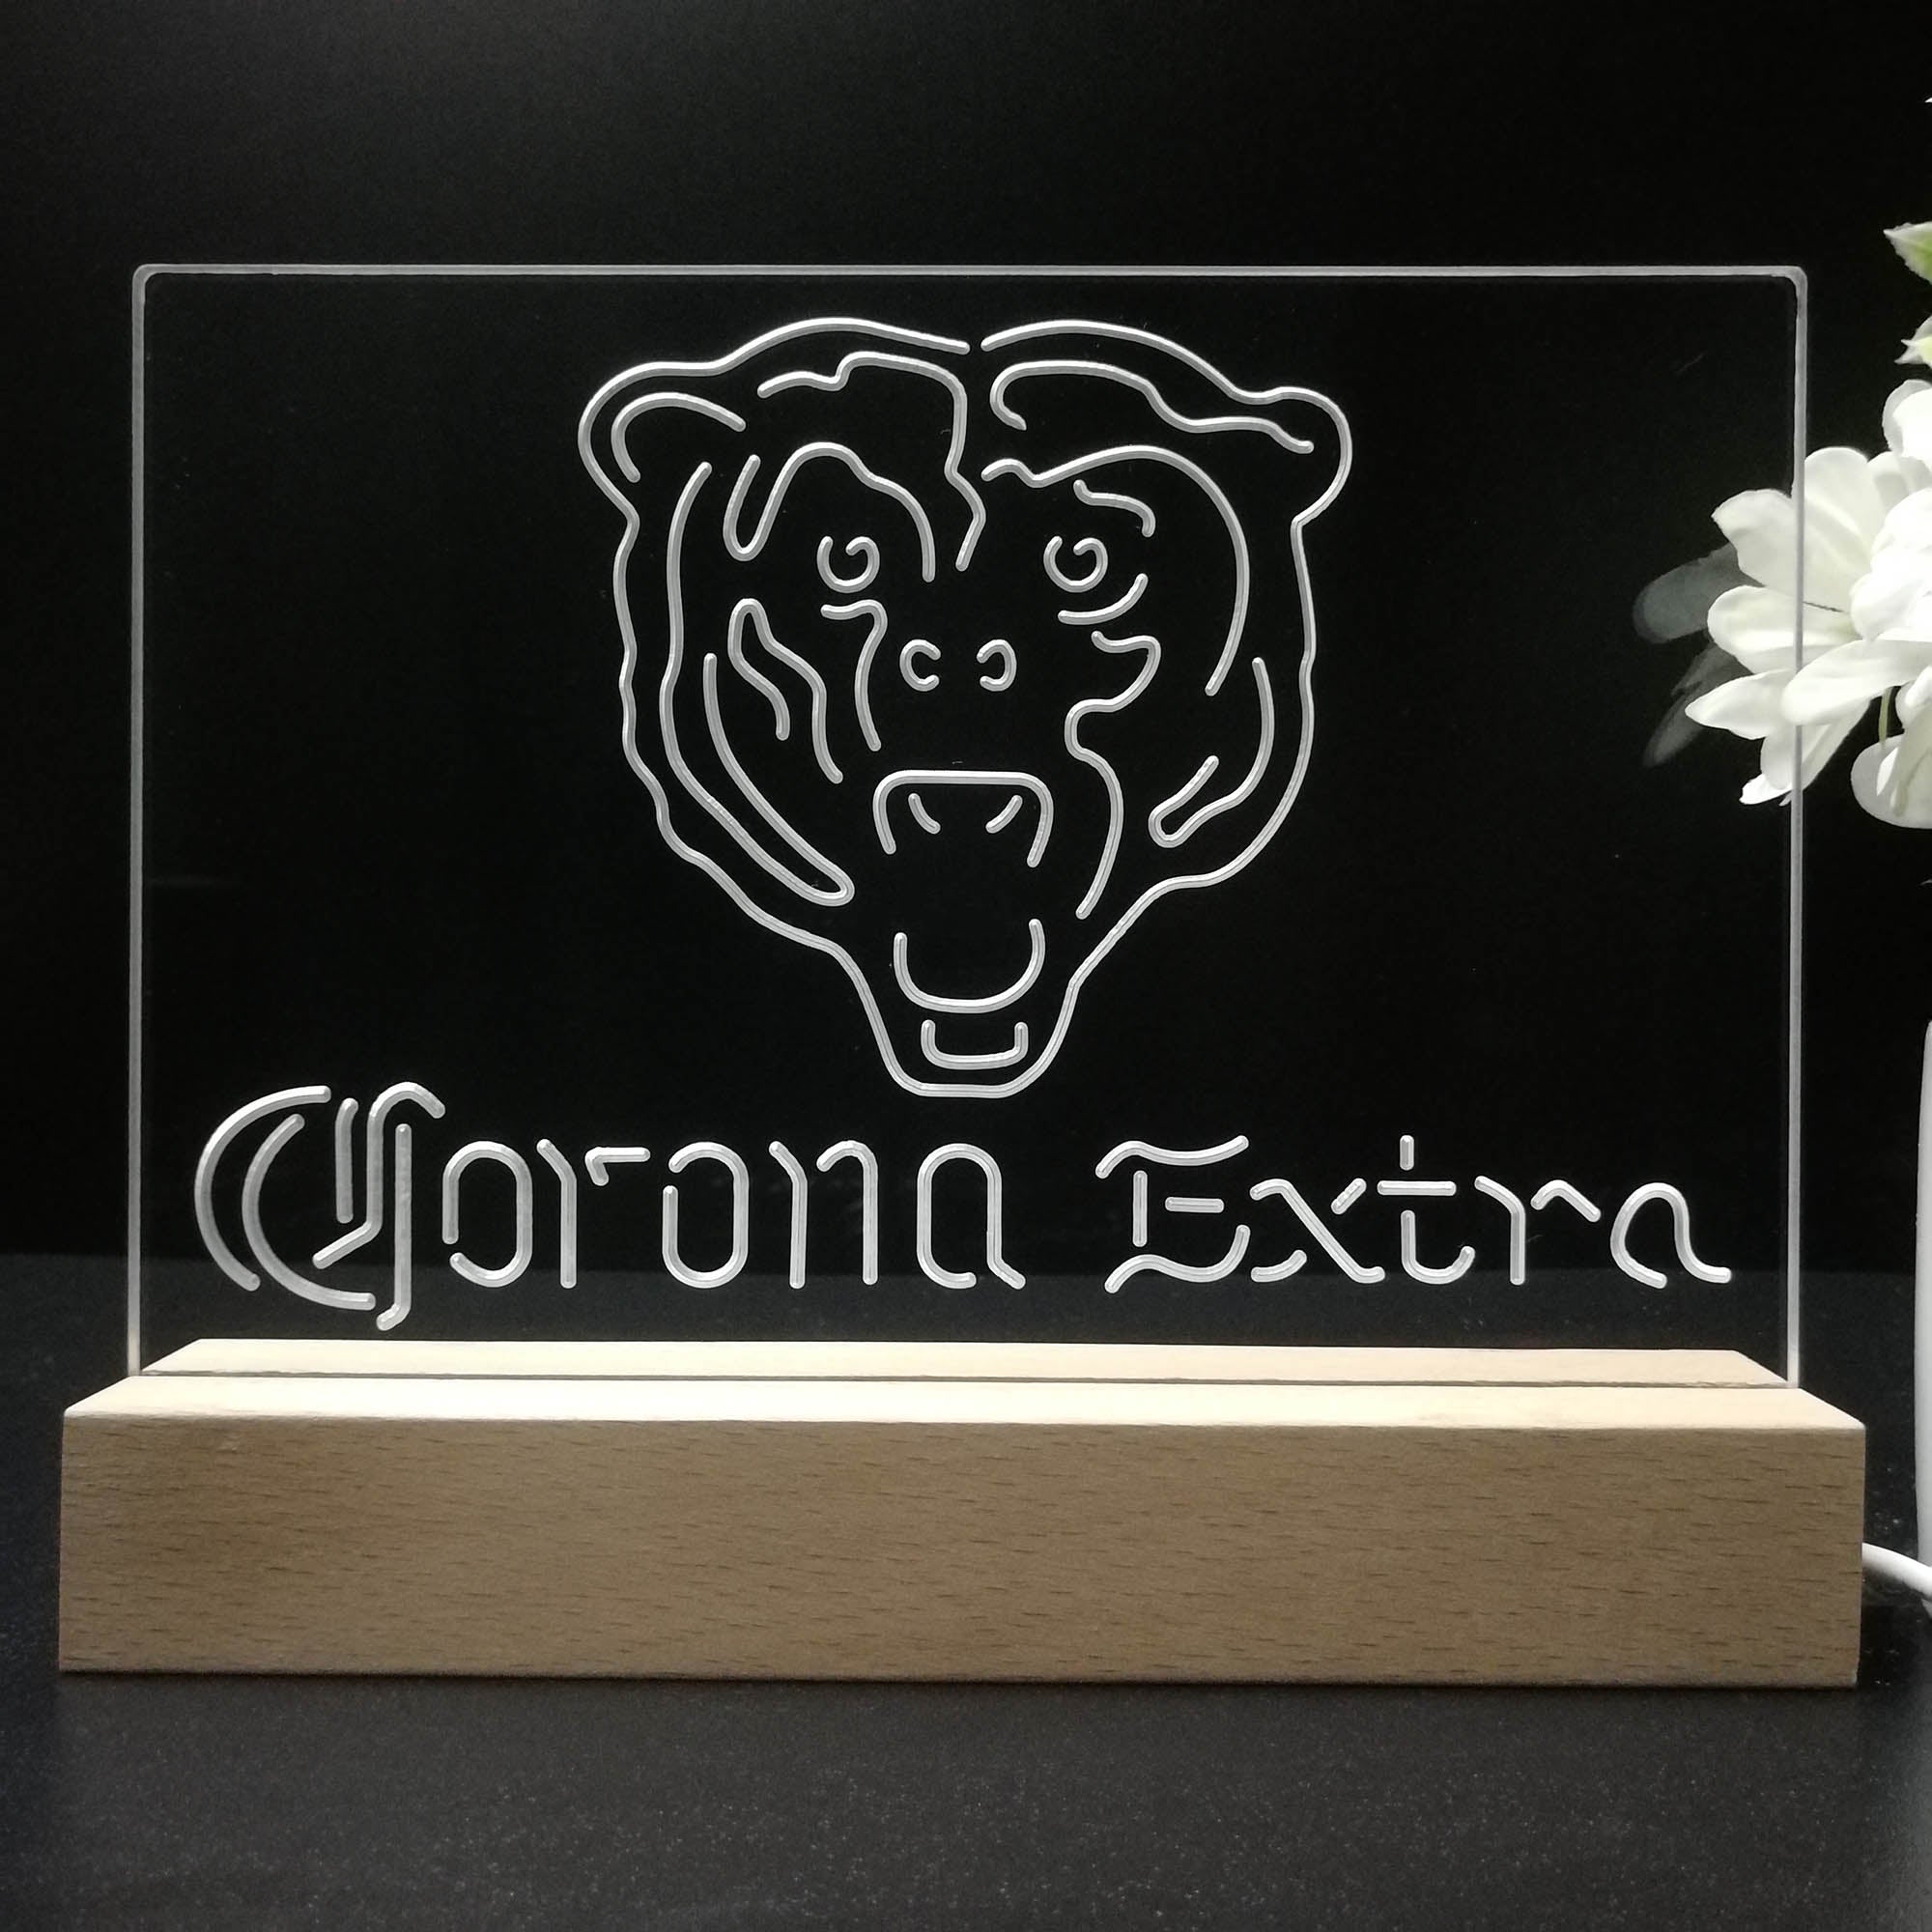 Corona Extra Bar Chicago Bears Est. 1920 Night Light Pub Bar Lamp